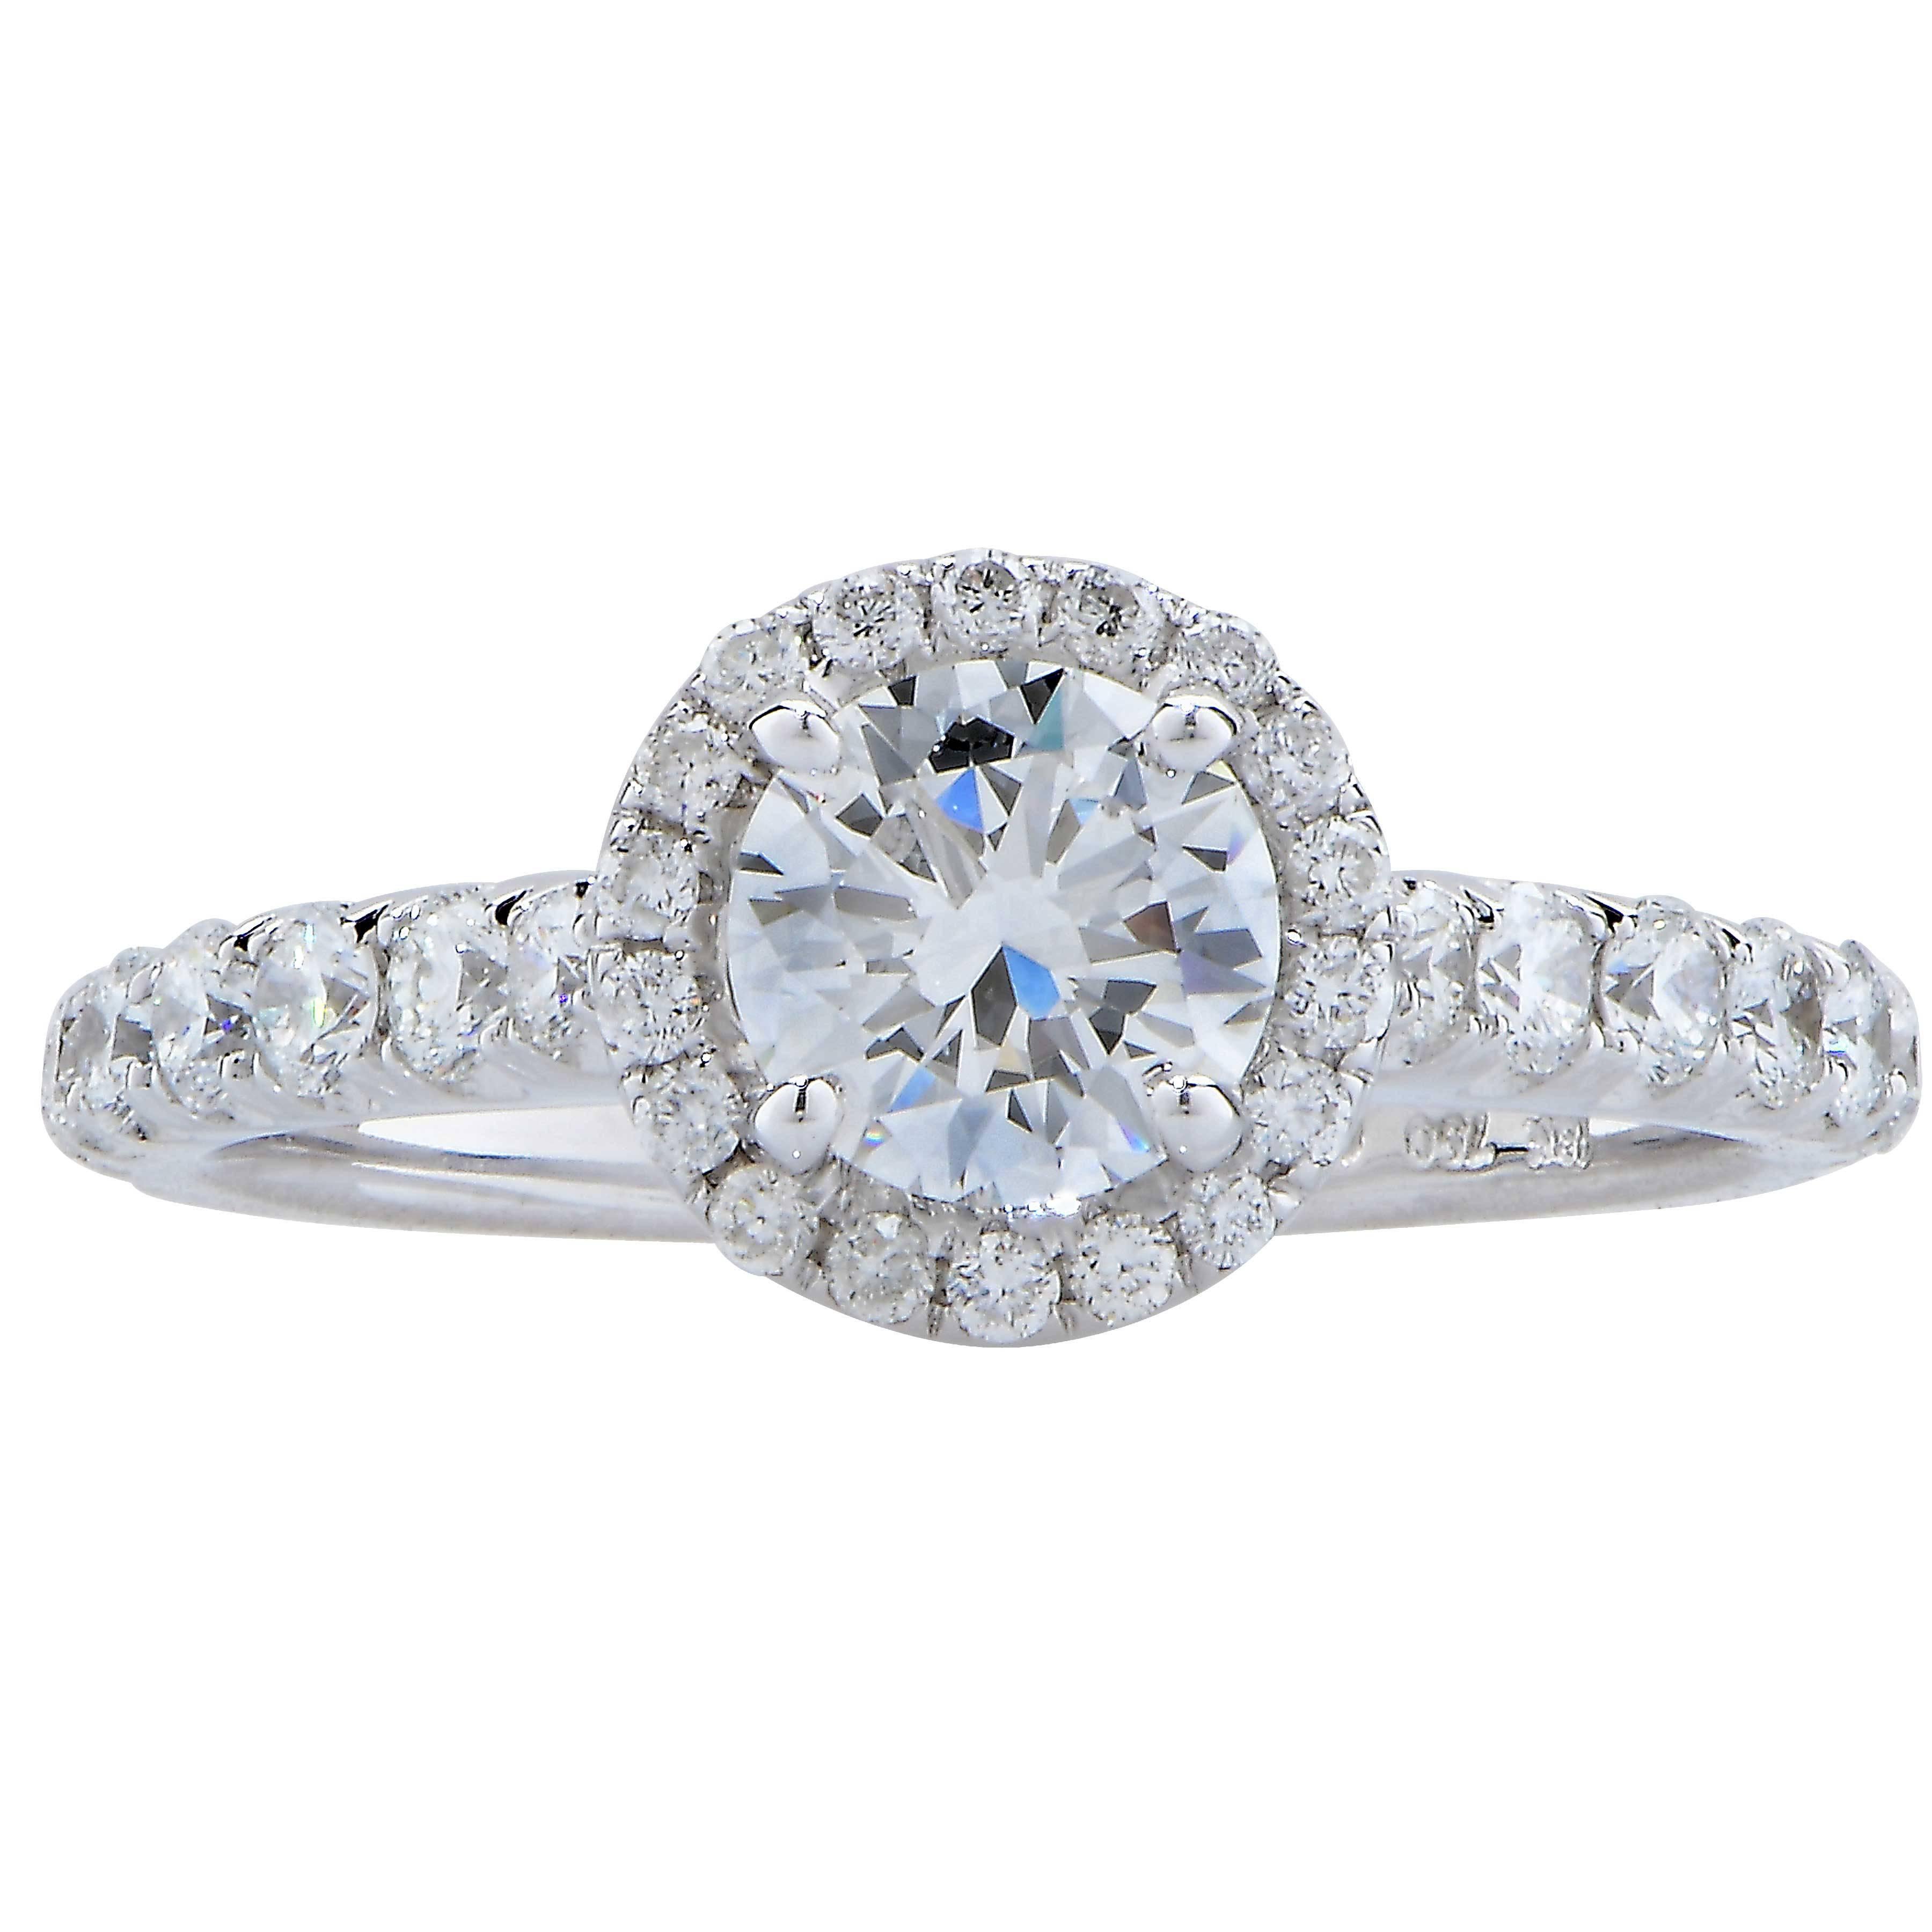 .78 carat diamond ring